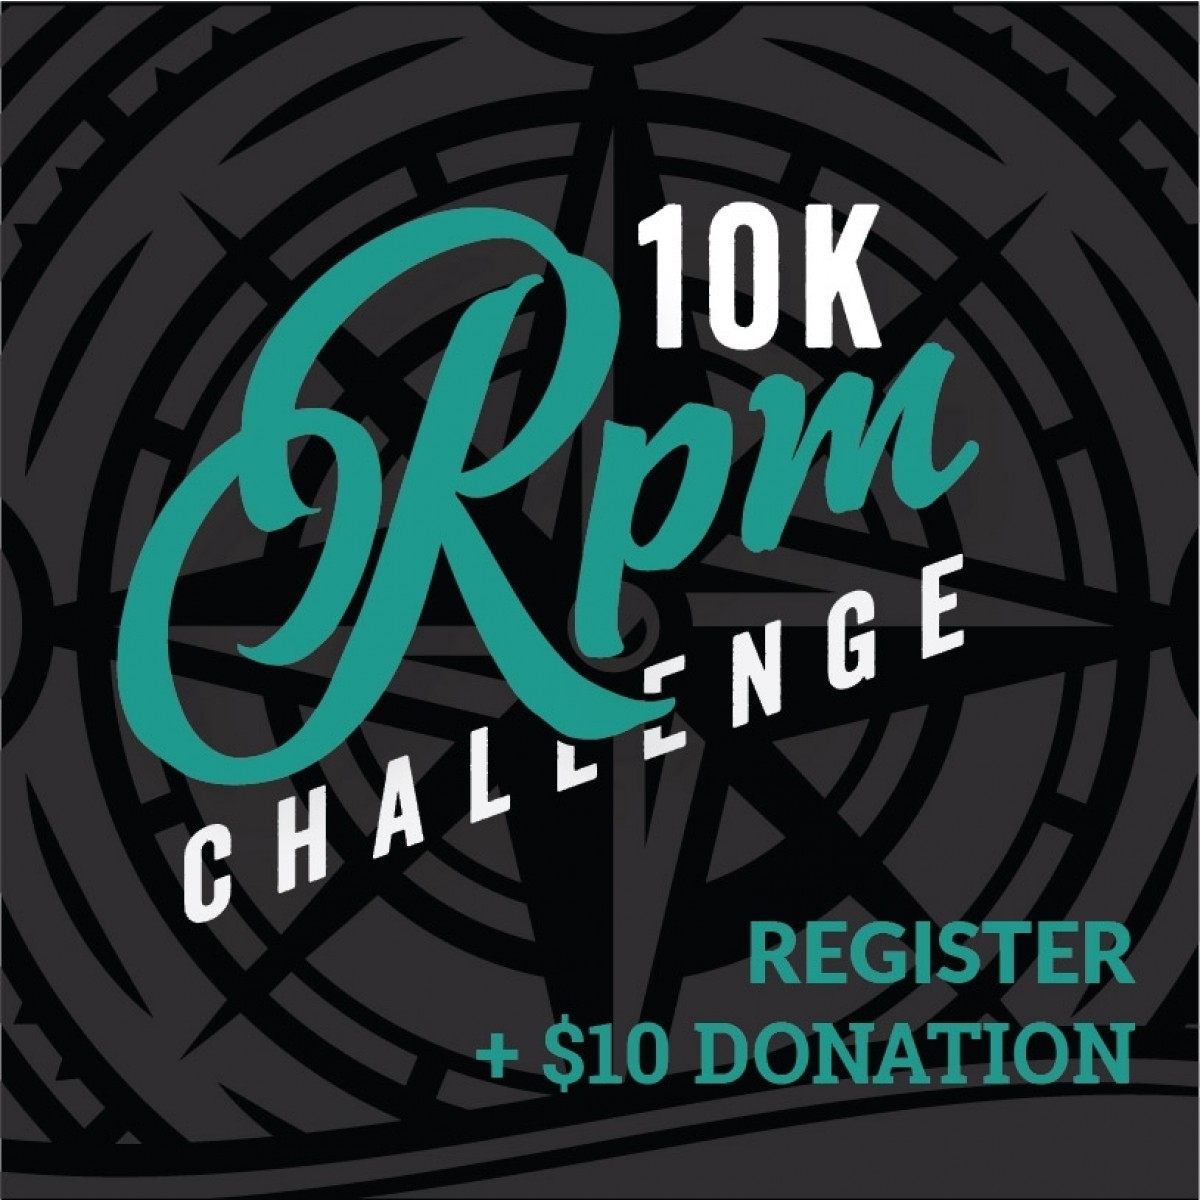 10k Challenge Registration / Donation